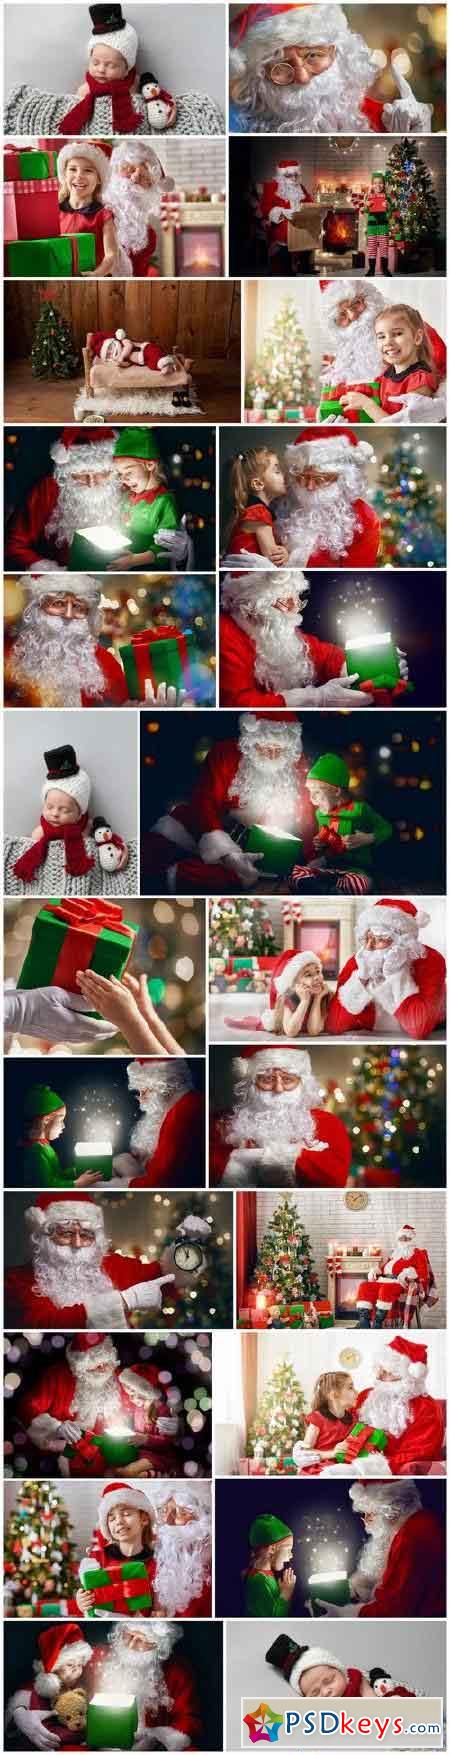 Dear Santa, happy kids and Christmas gifts - 24xUHQ JPEG Photo Stock